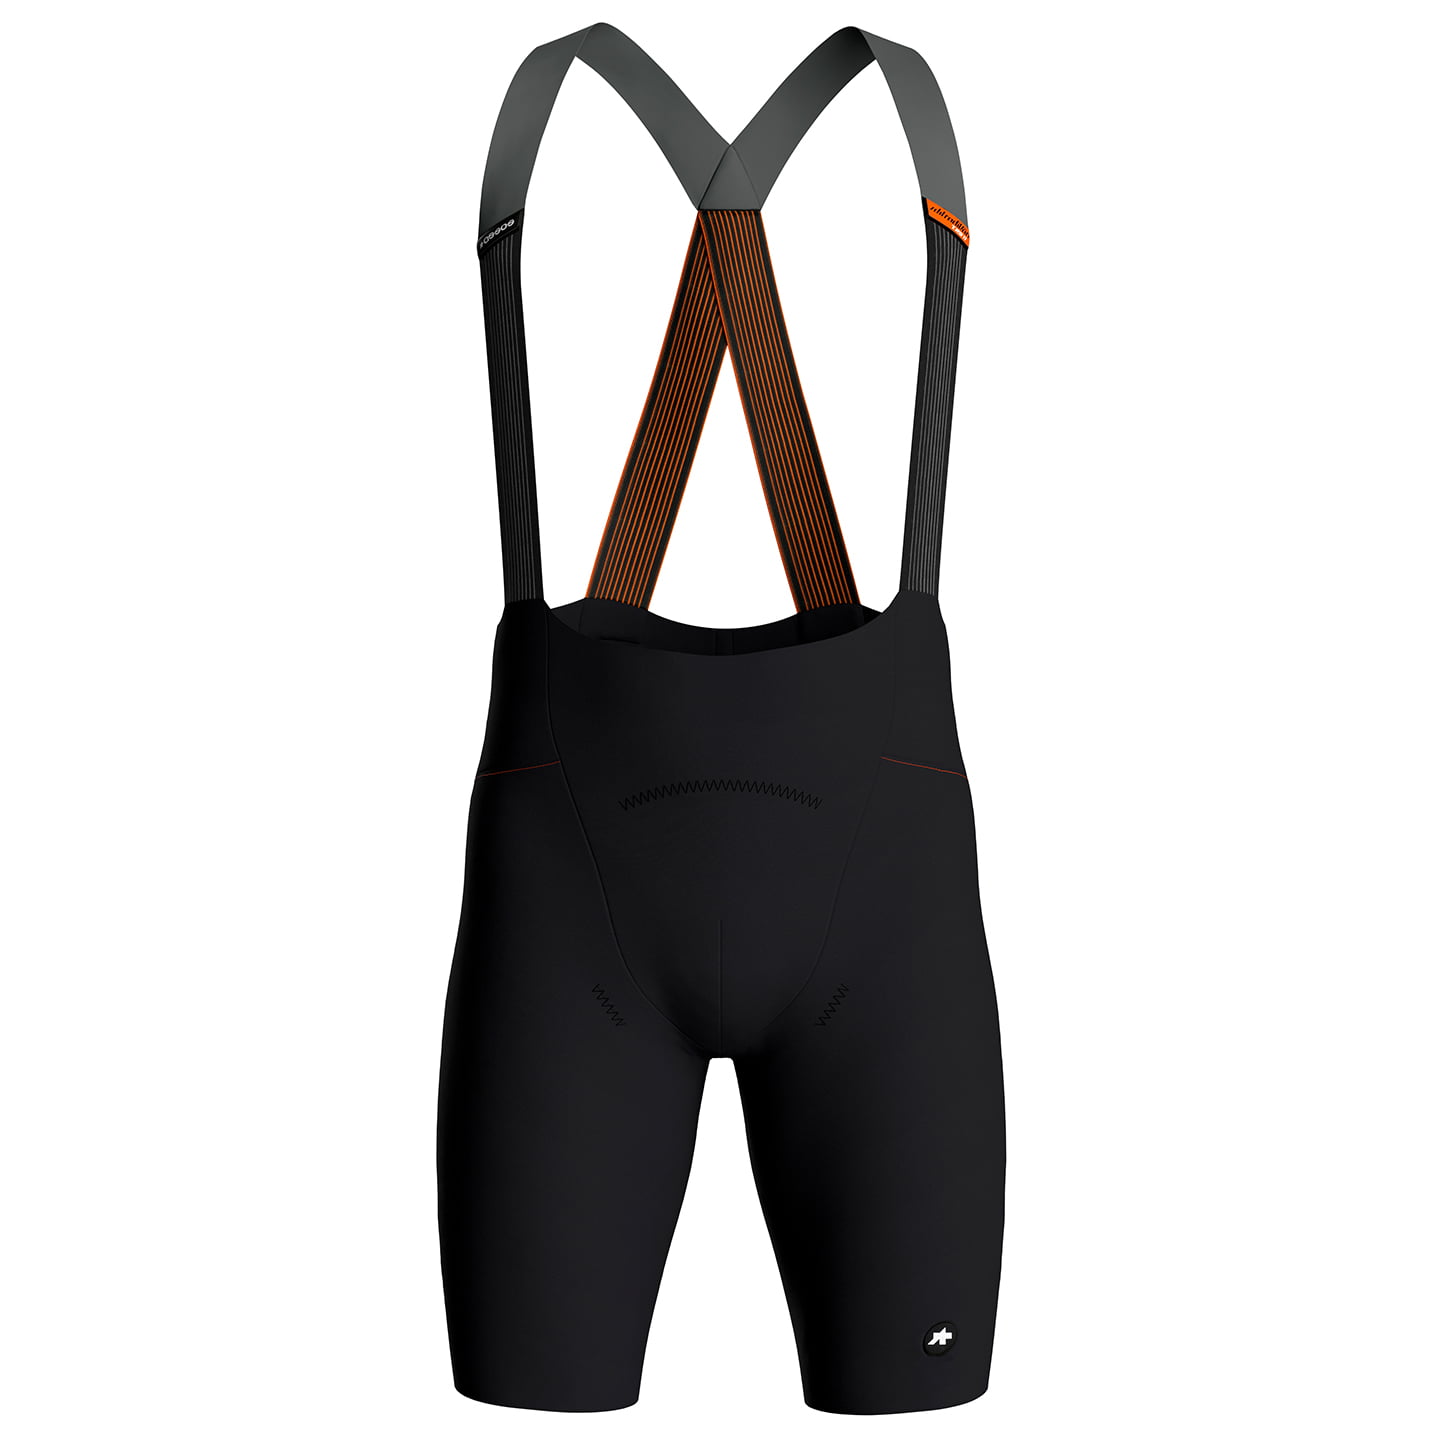 ASSOS Equipe RSR S11 Bib Shorts, for men, size XL, Cycle shorts, Cycling clothing